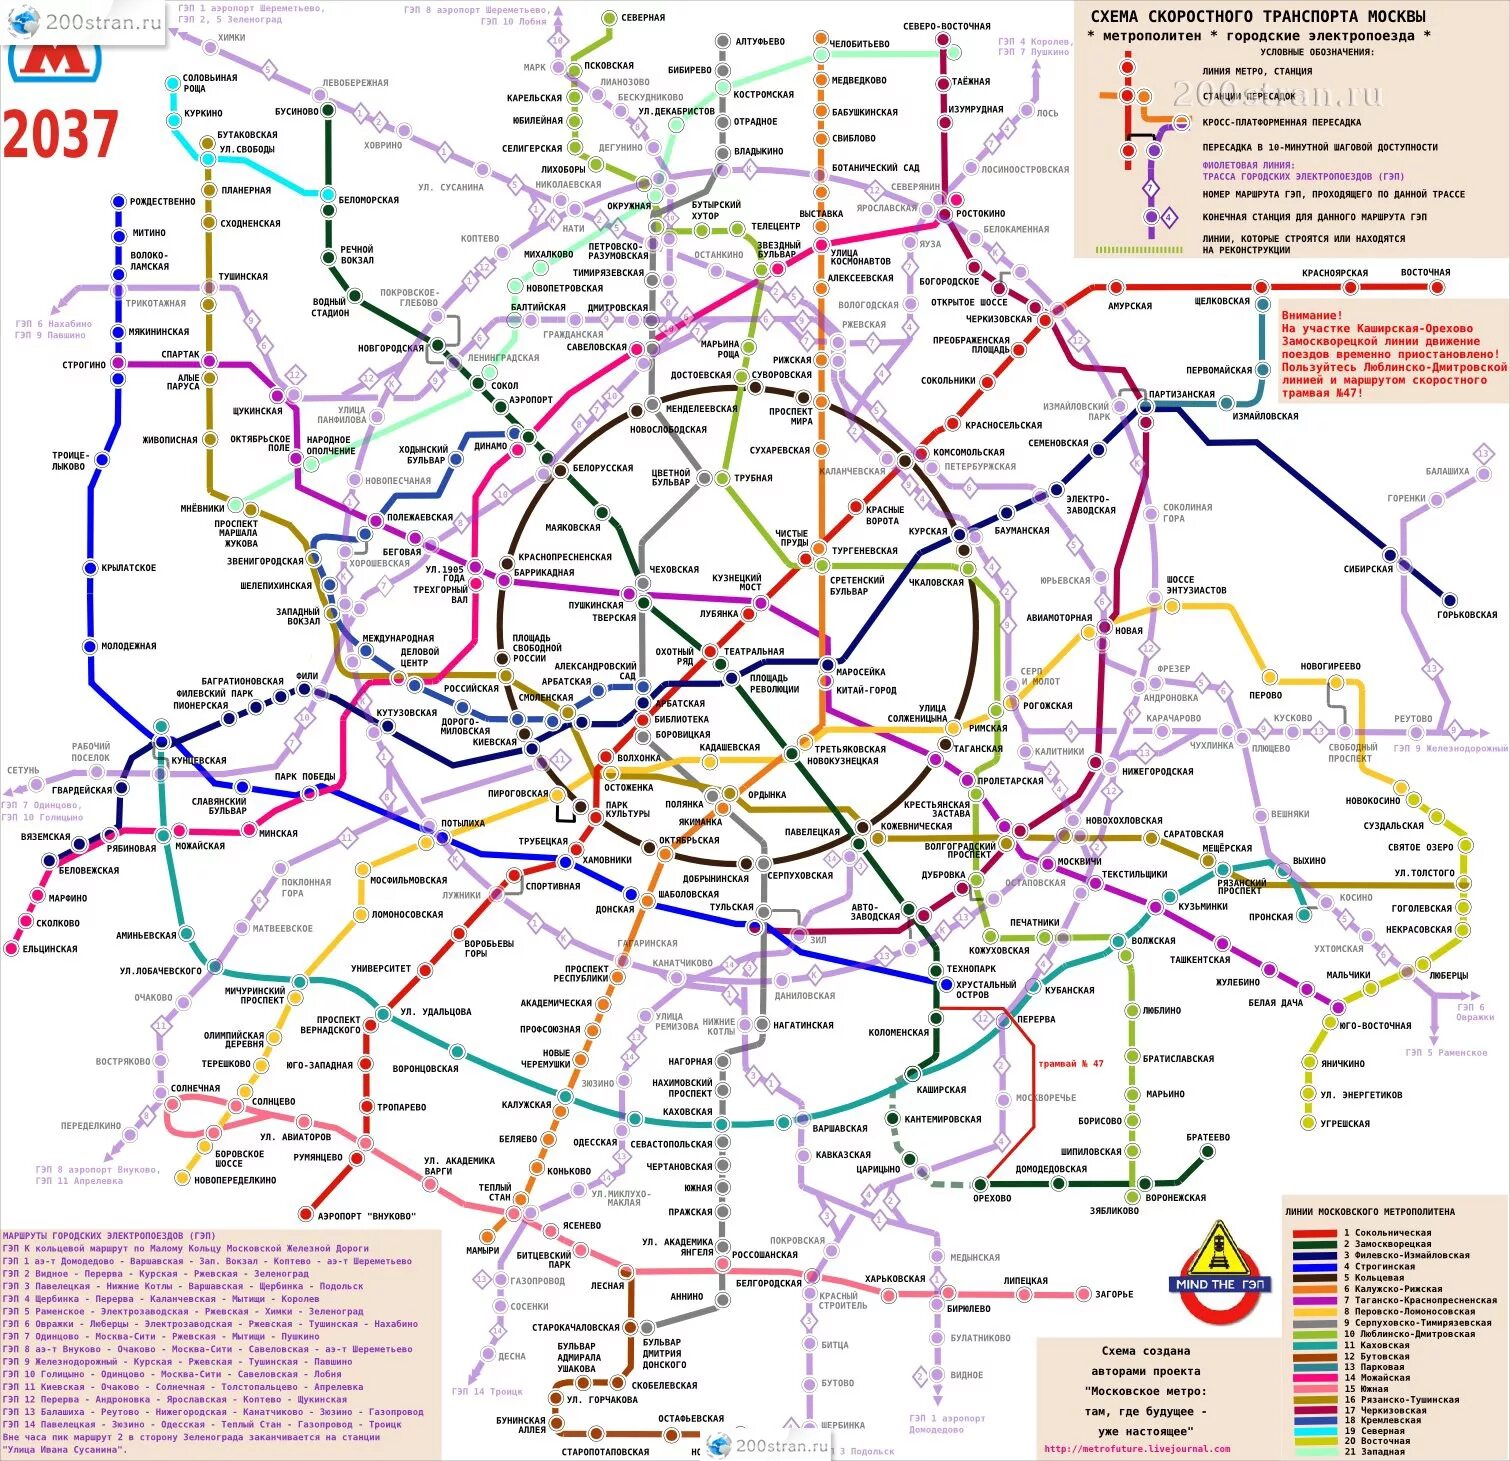 Схема метрополитена 2024г. Карта метро 2030 Москва схема. Карта метро до 2027 года Москва. Схема Московского метрополитена 2030 года. План развития метро Москвы до 2035 года схема.